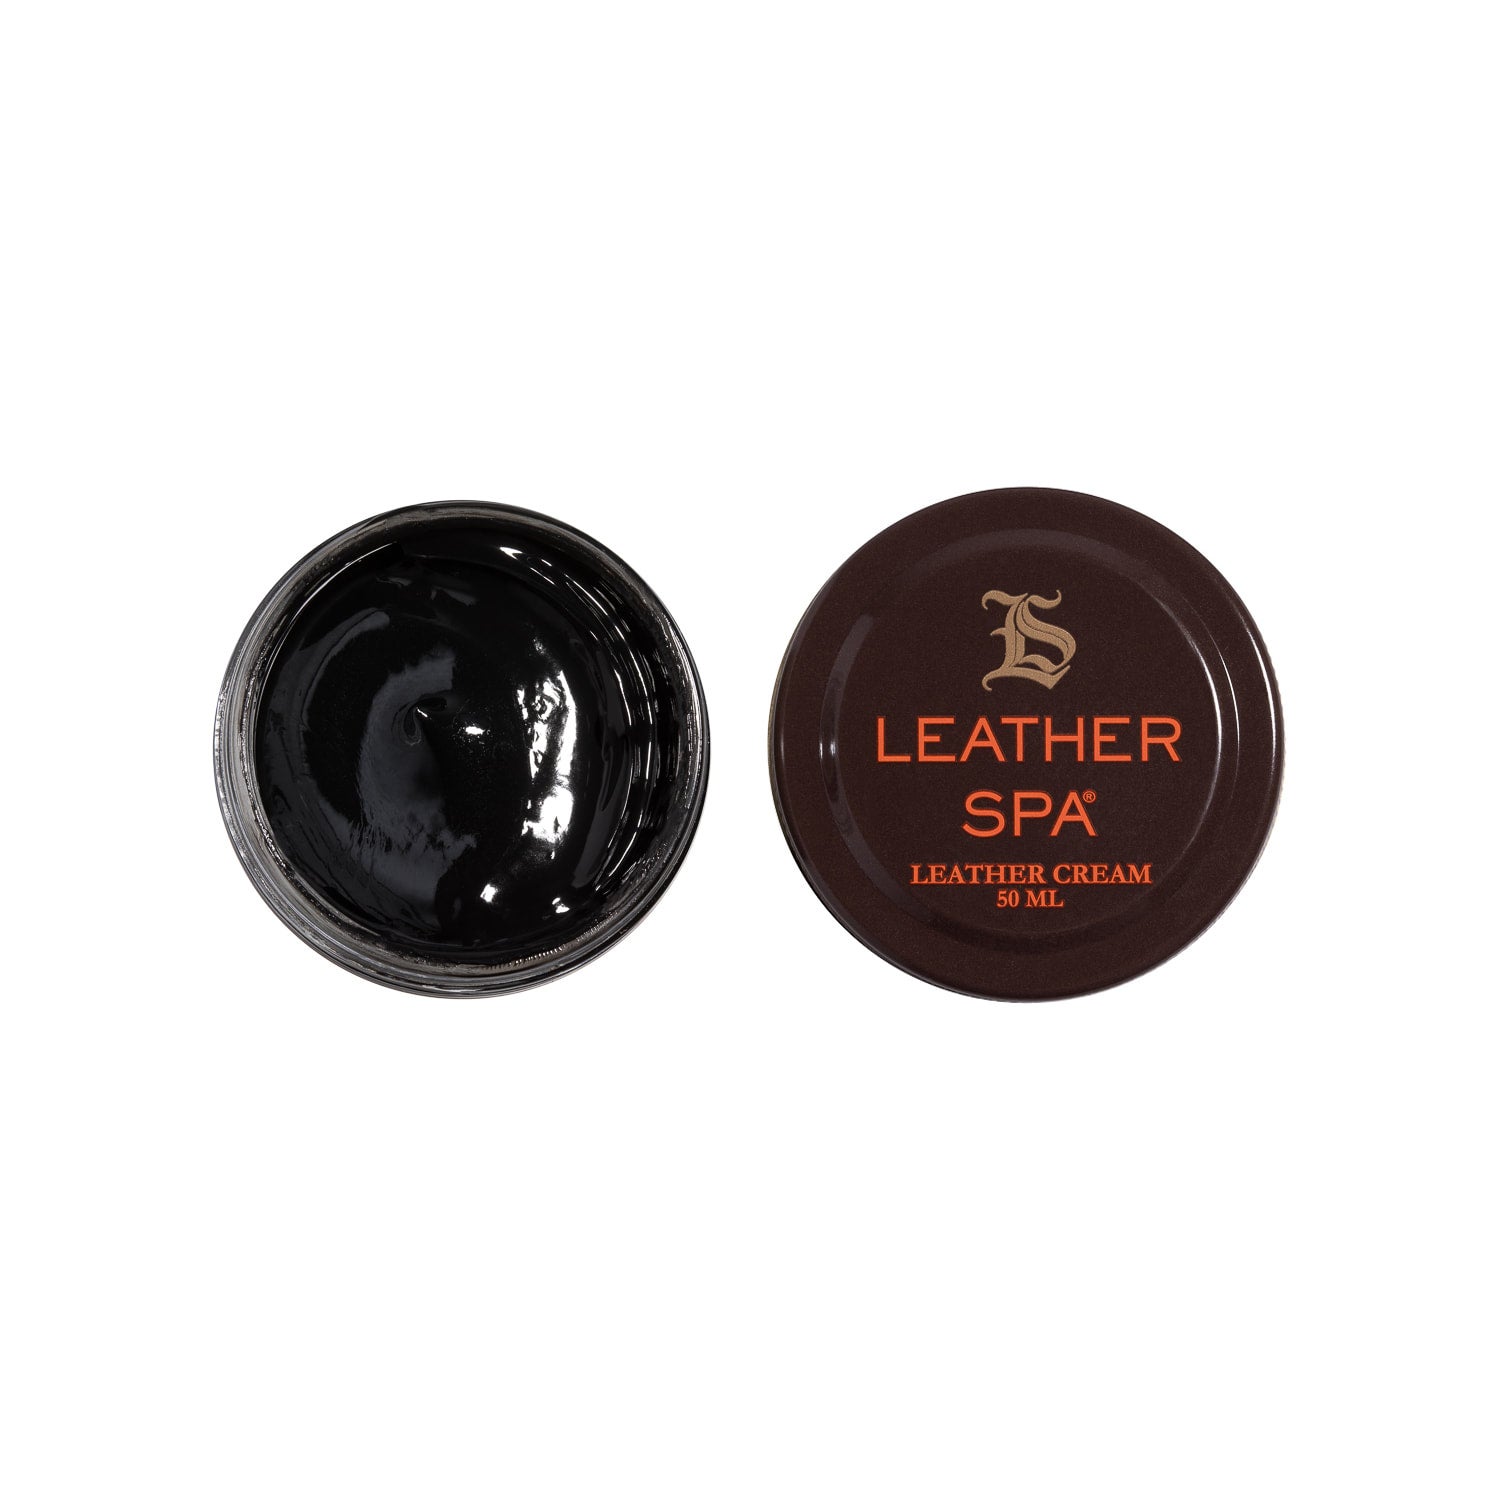 Leather Wax